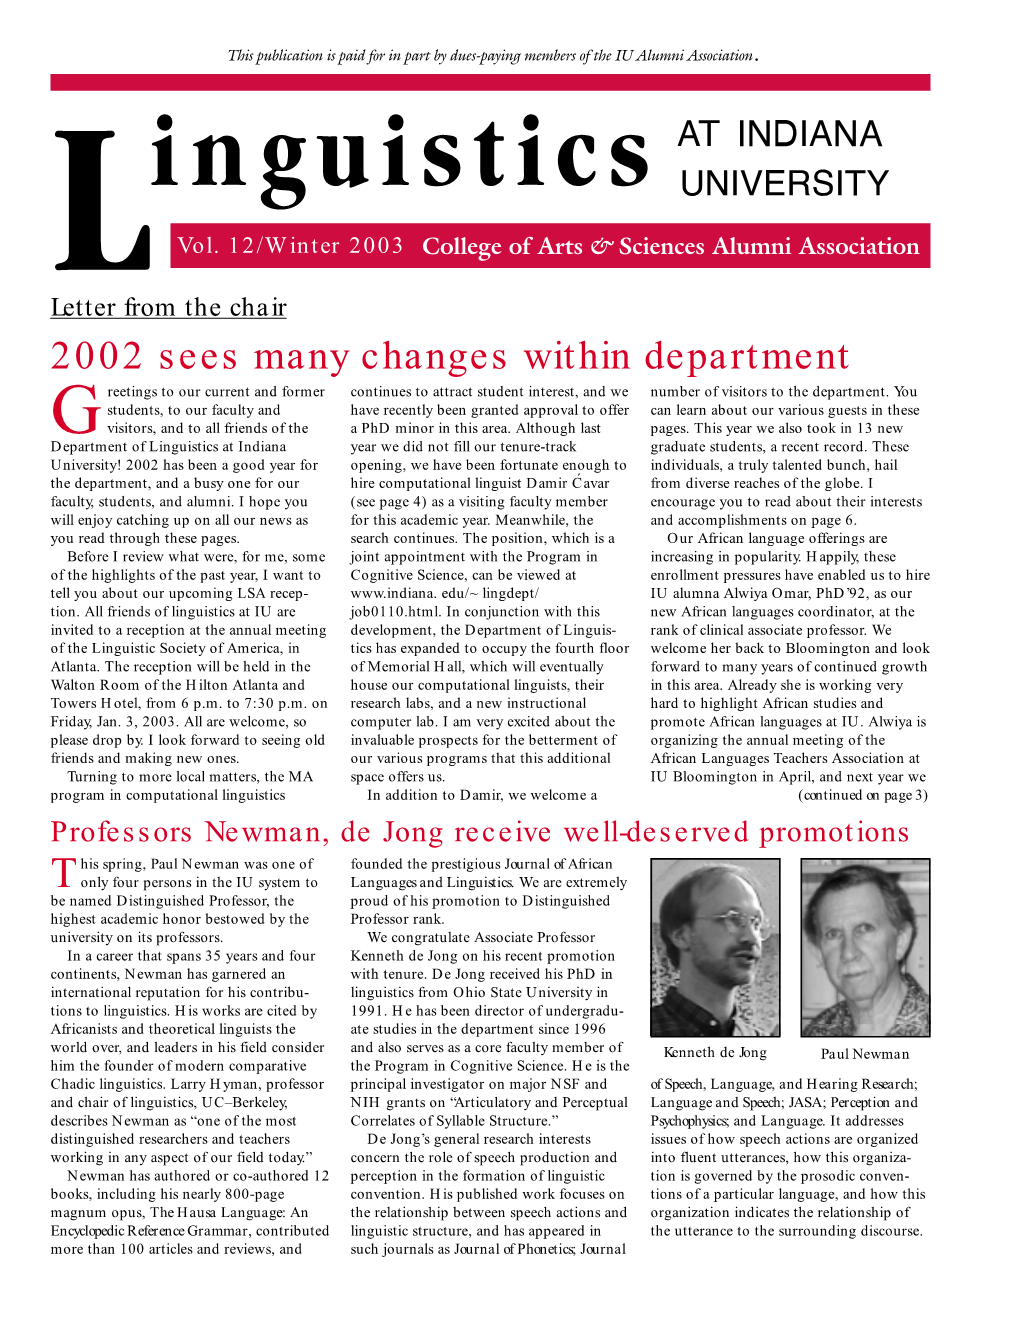 Linguisitics Newslet-W03.Pdf